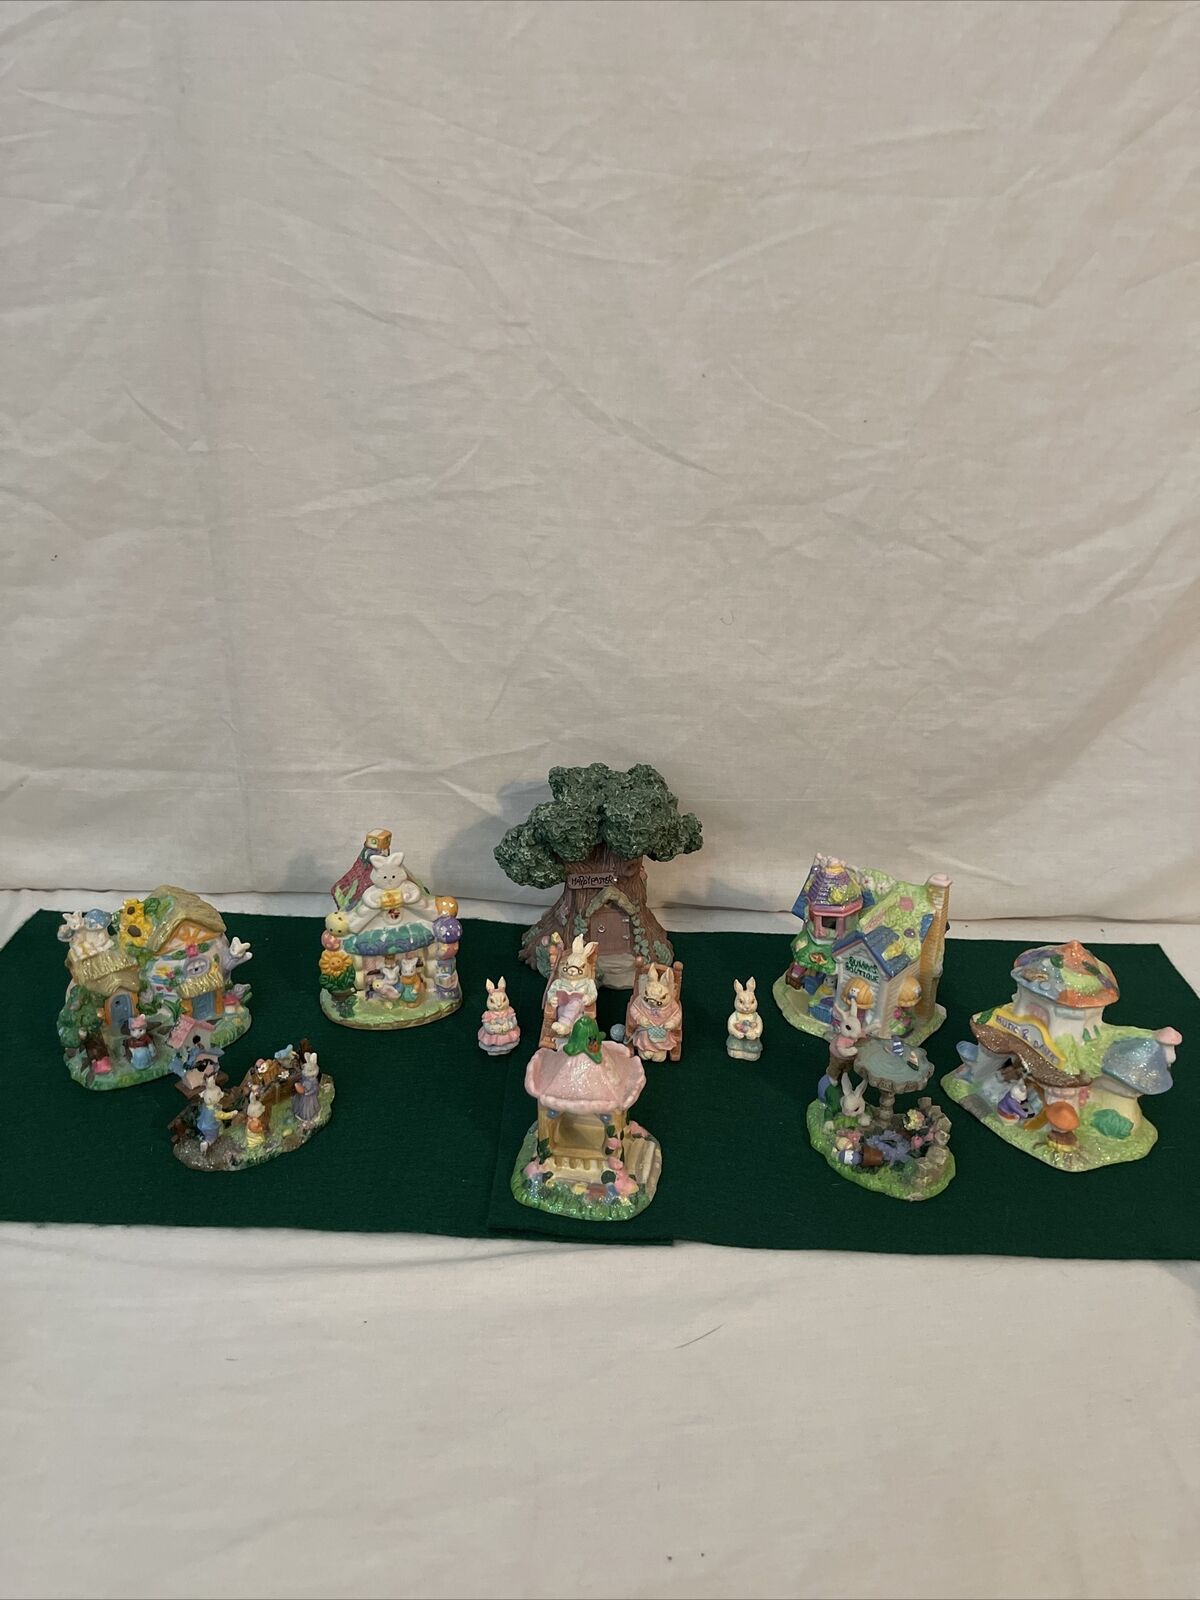 2004 Hoppy Hollow Ceramic Easter Bunny Village Houses/Buildings/figurine Lot 12